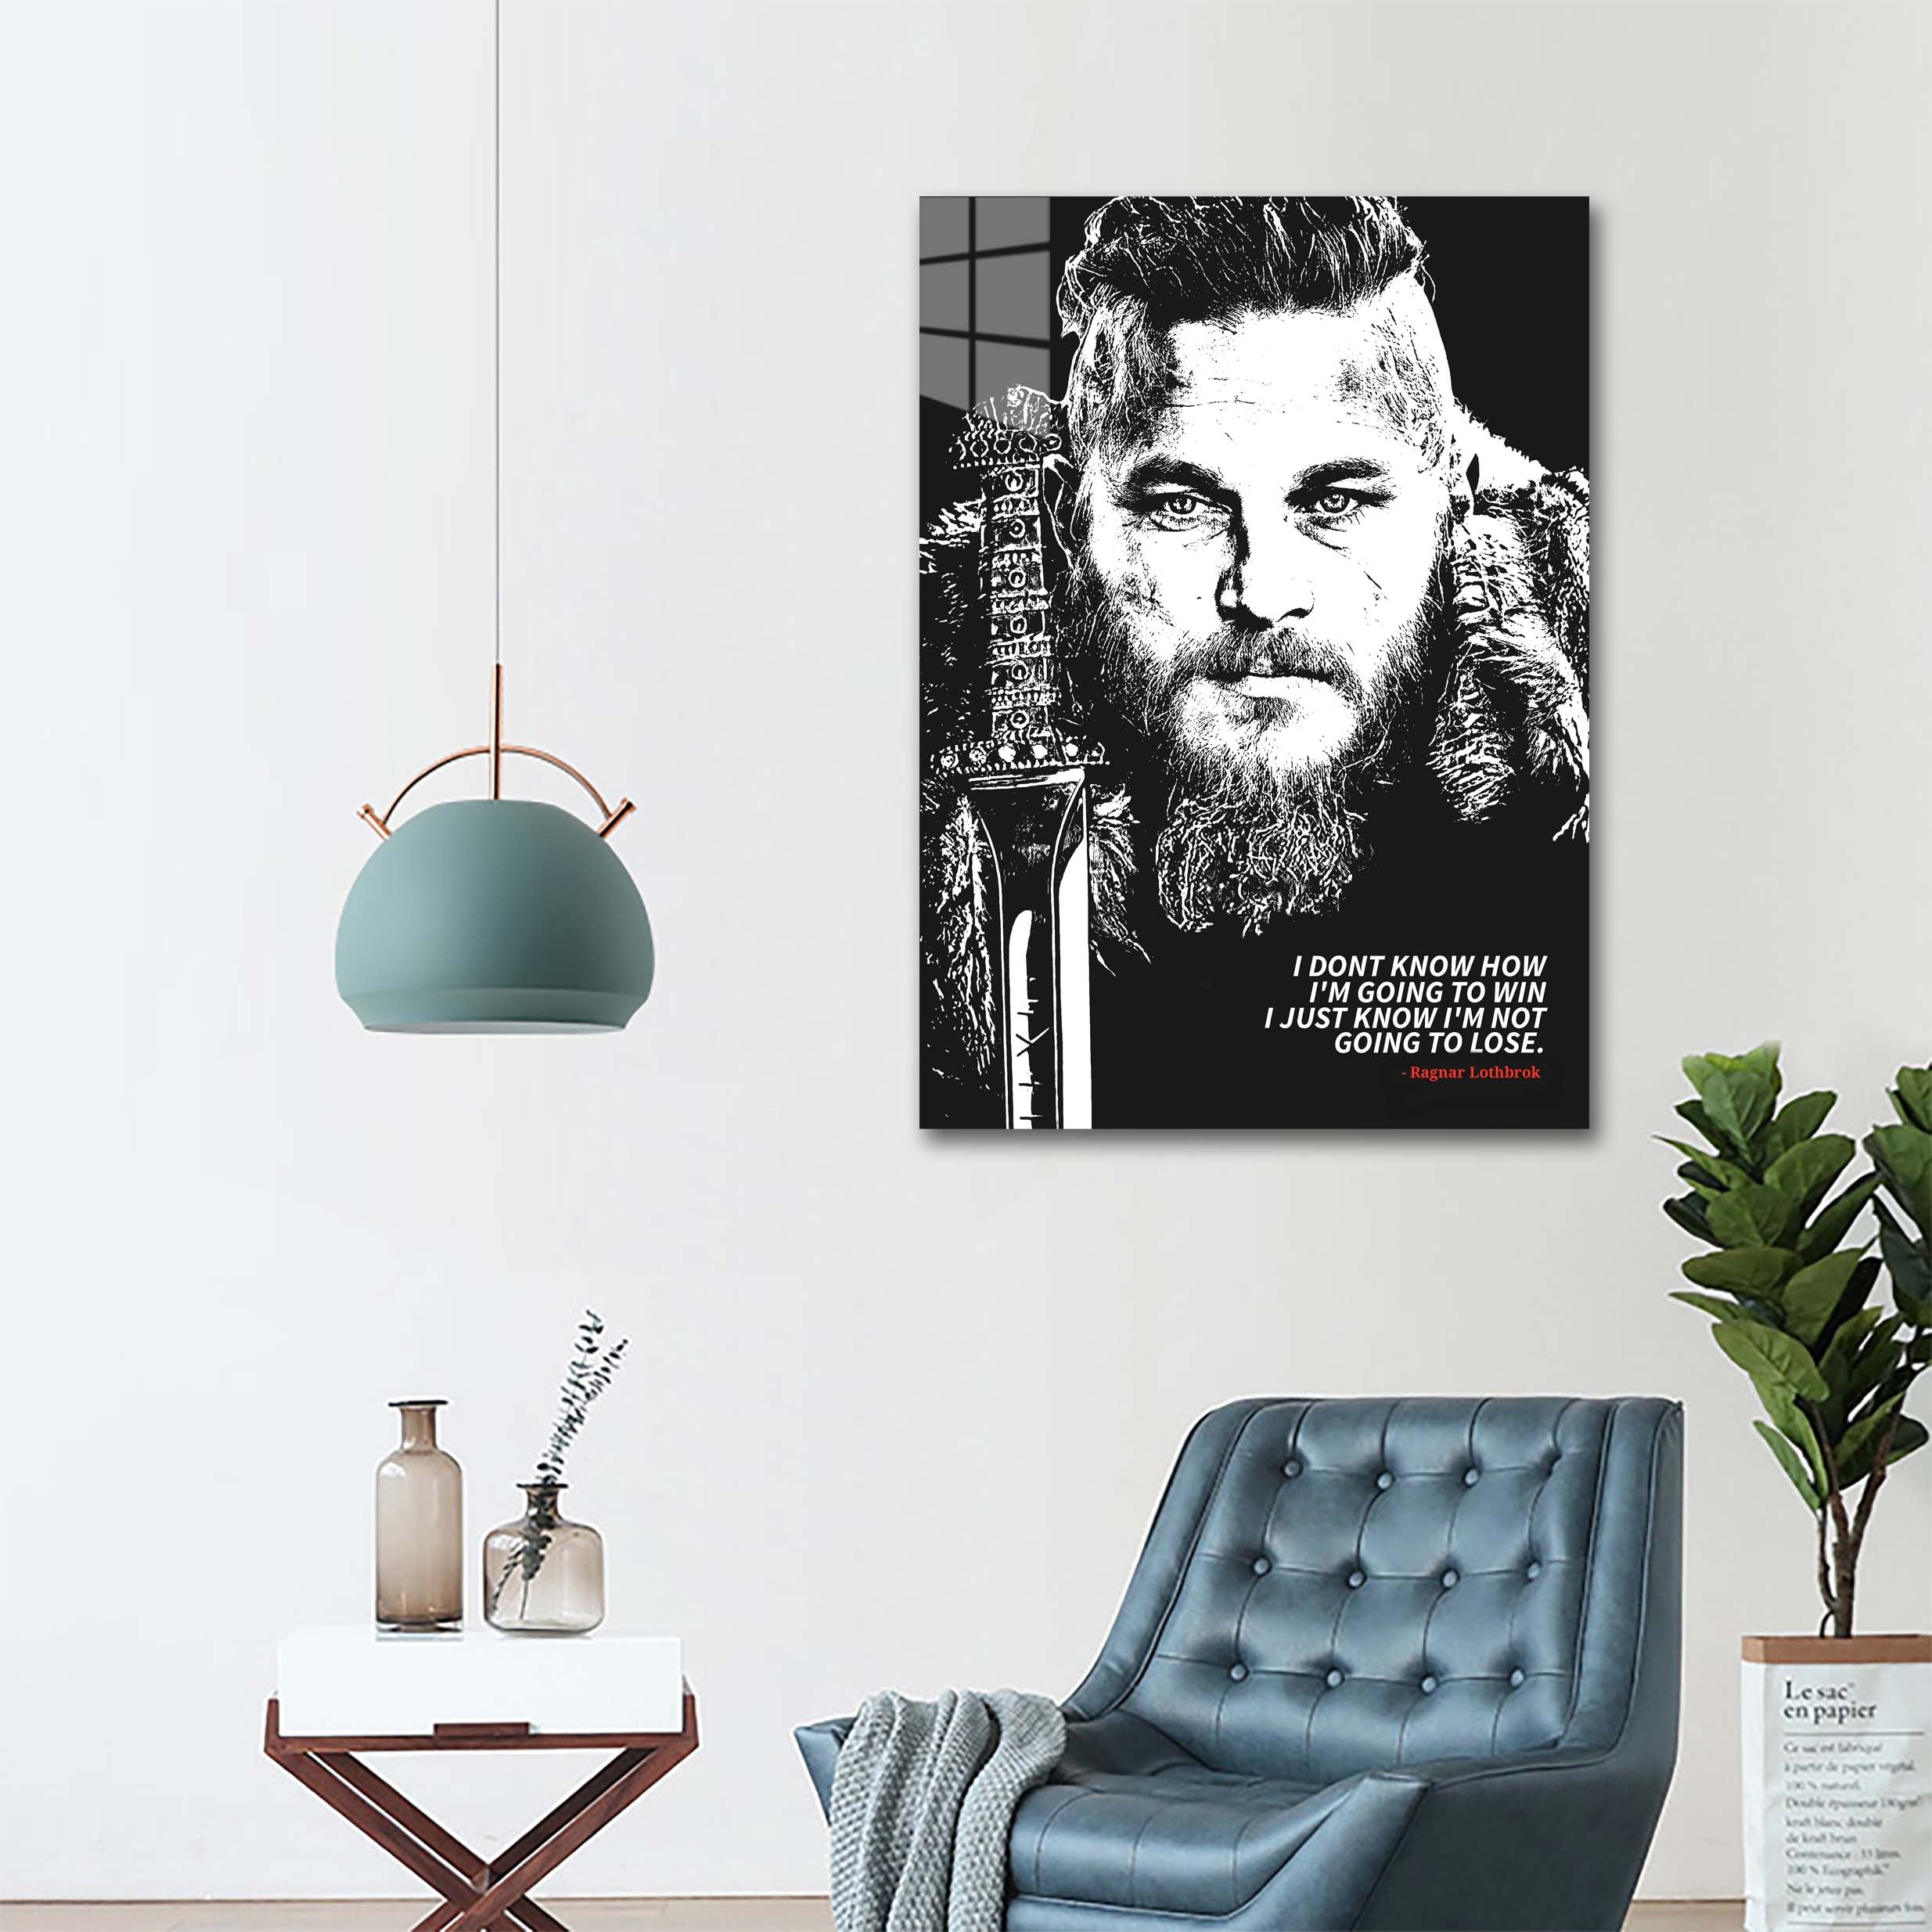 Ragnar Lothbrok -designed by @Dayo Art